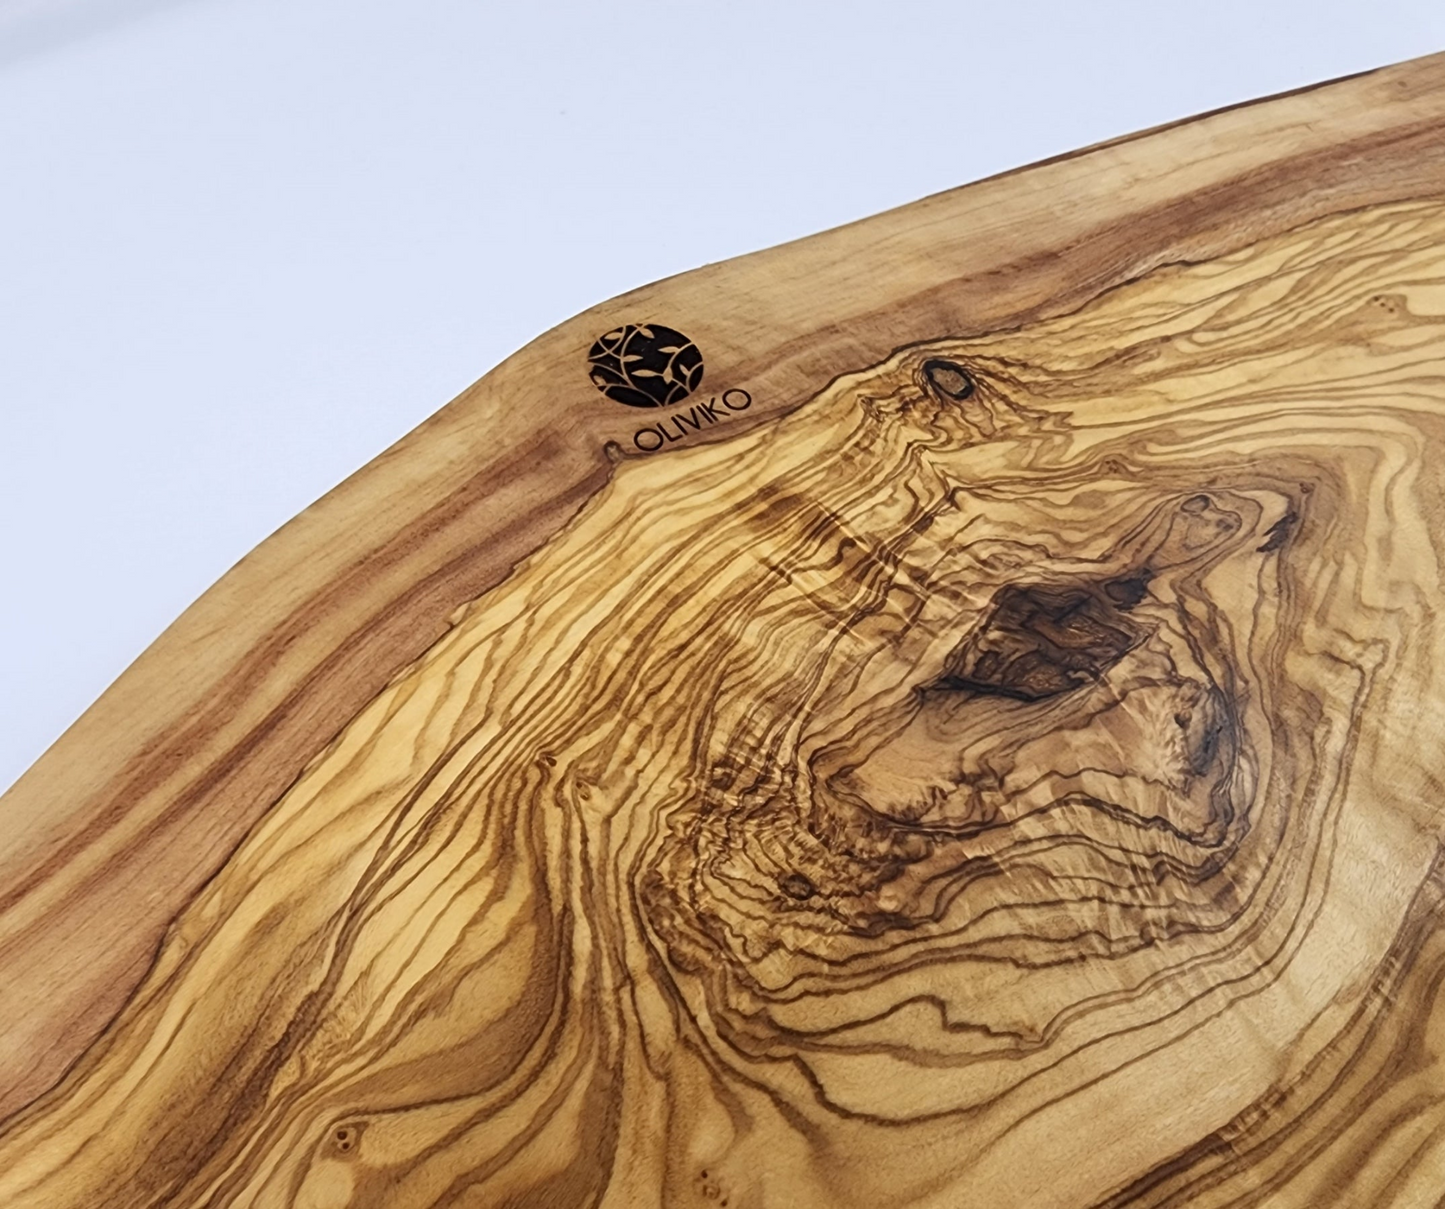 XL Handmade 100% Olive Wood Cutting Board 20 L x 8 W  inch / 50 L x W 20cm